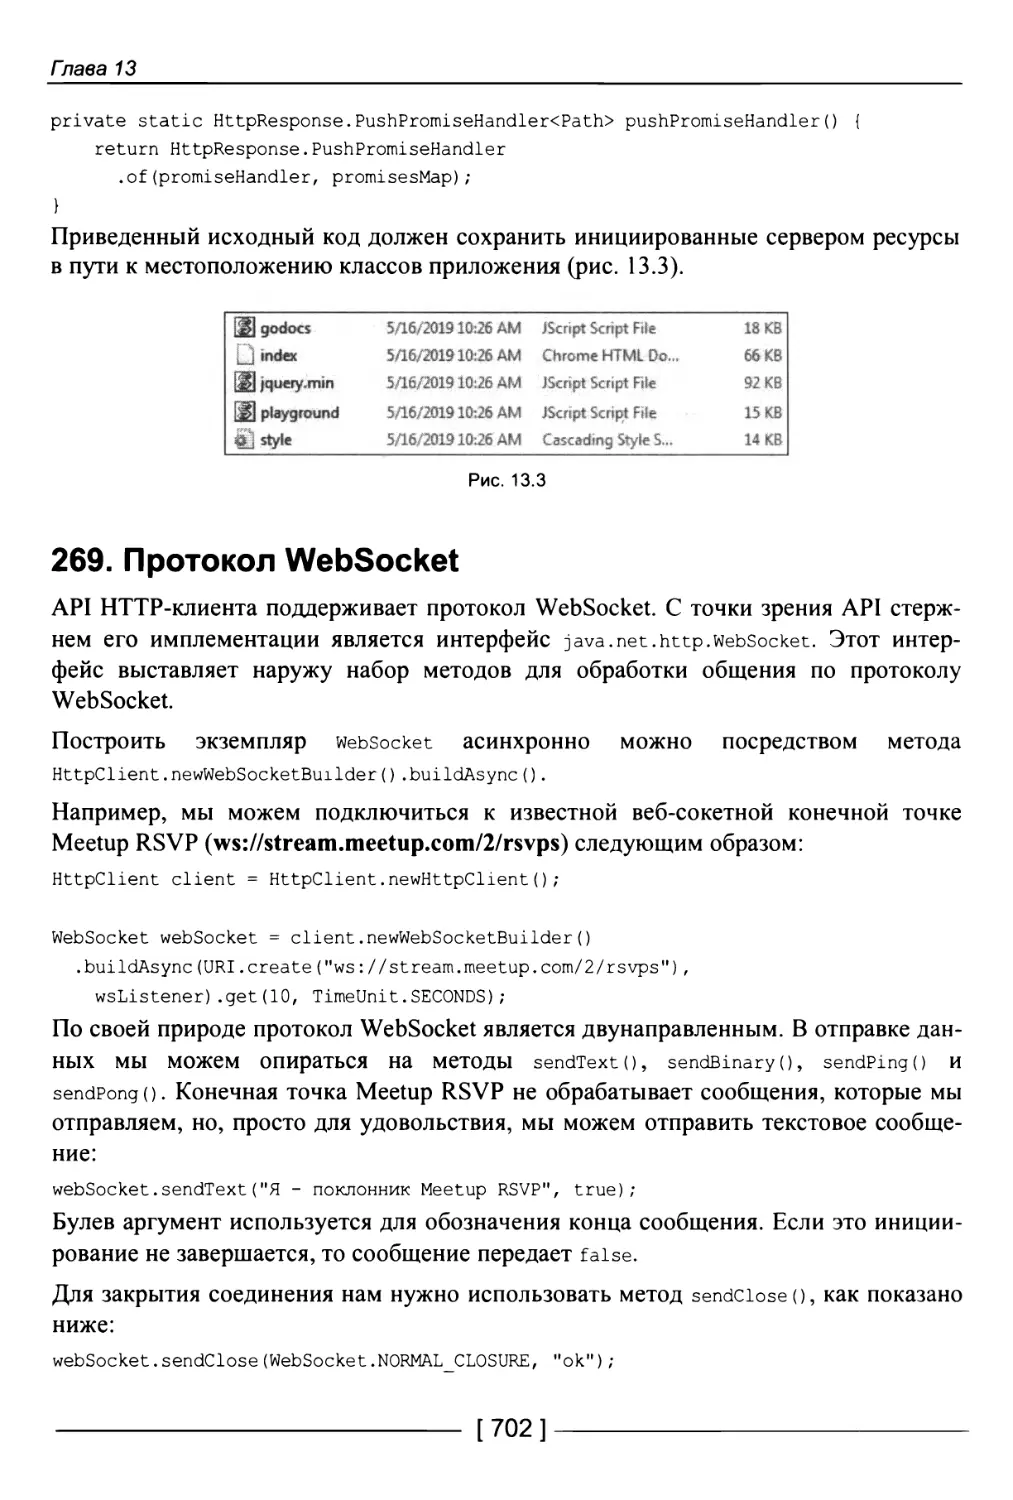 269. Протокол WebSocket